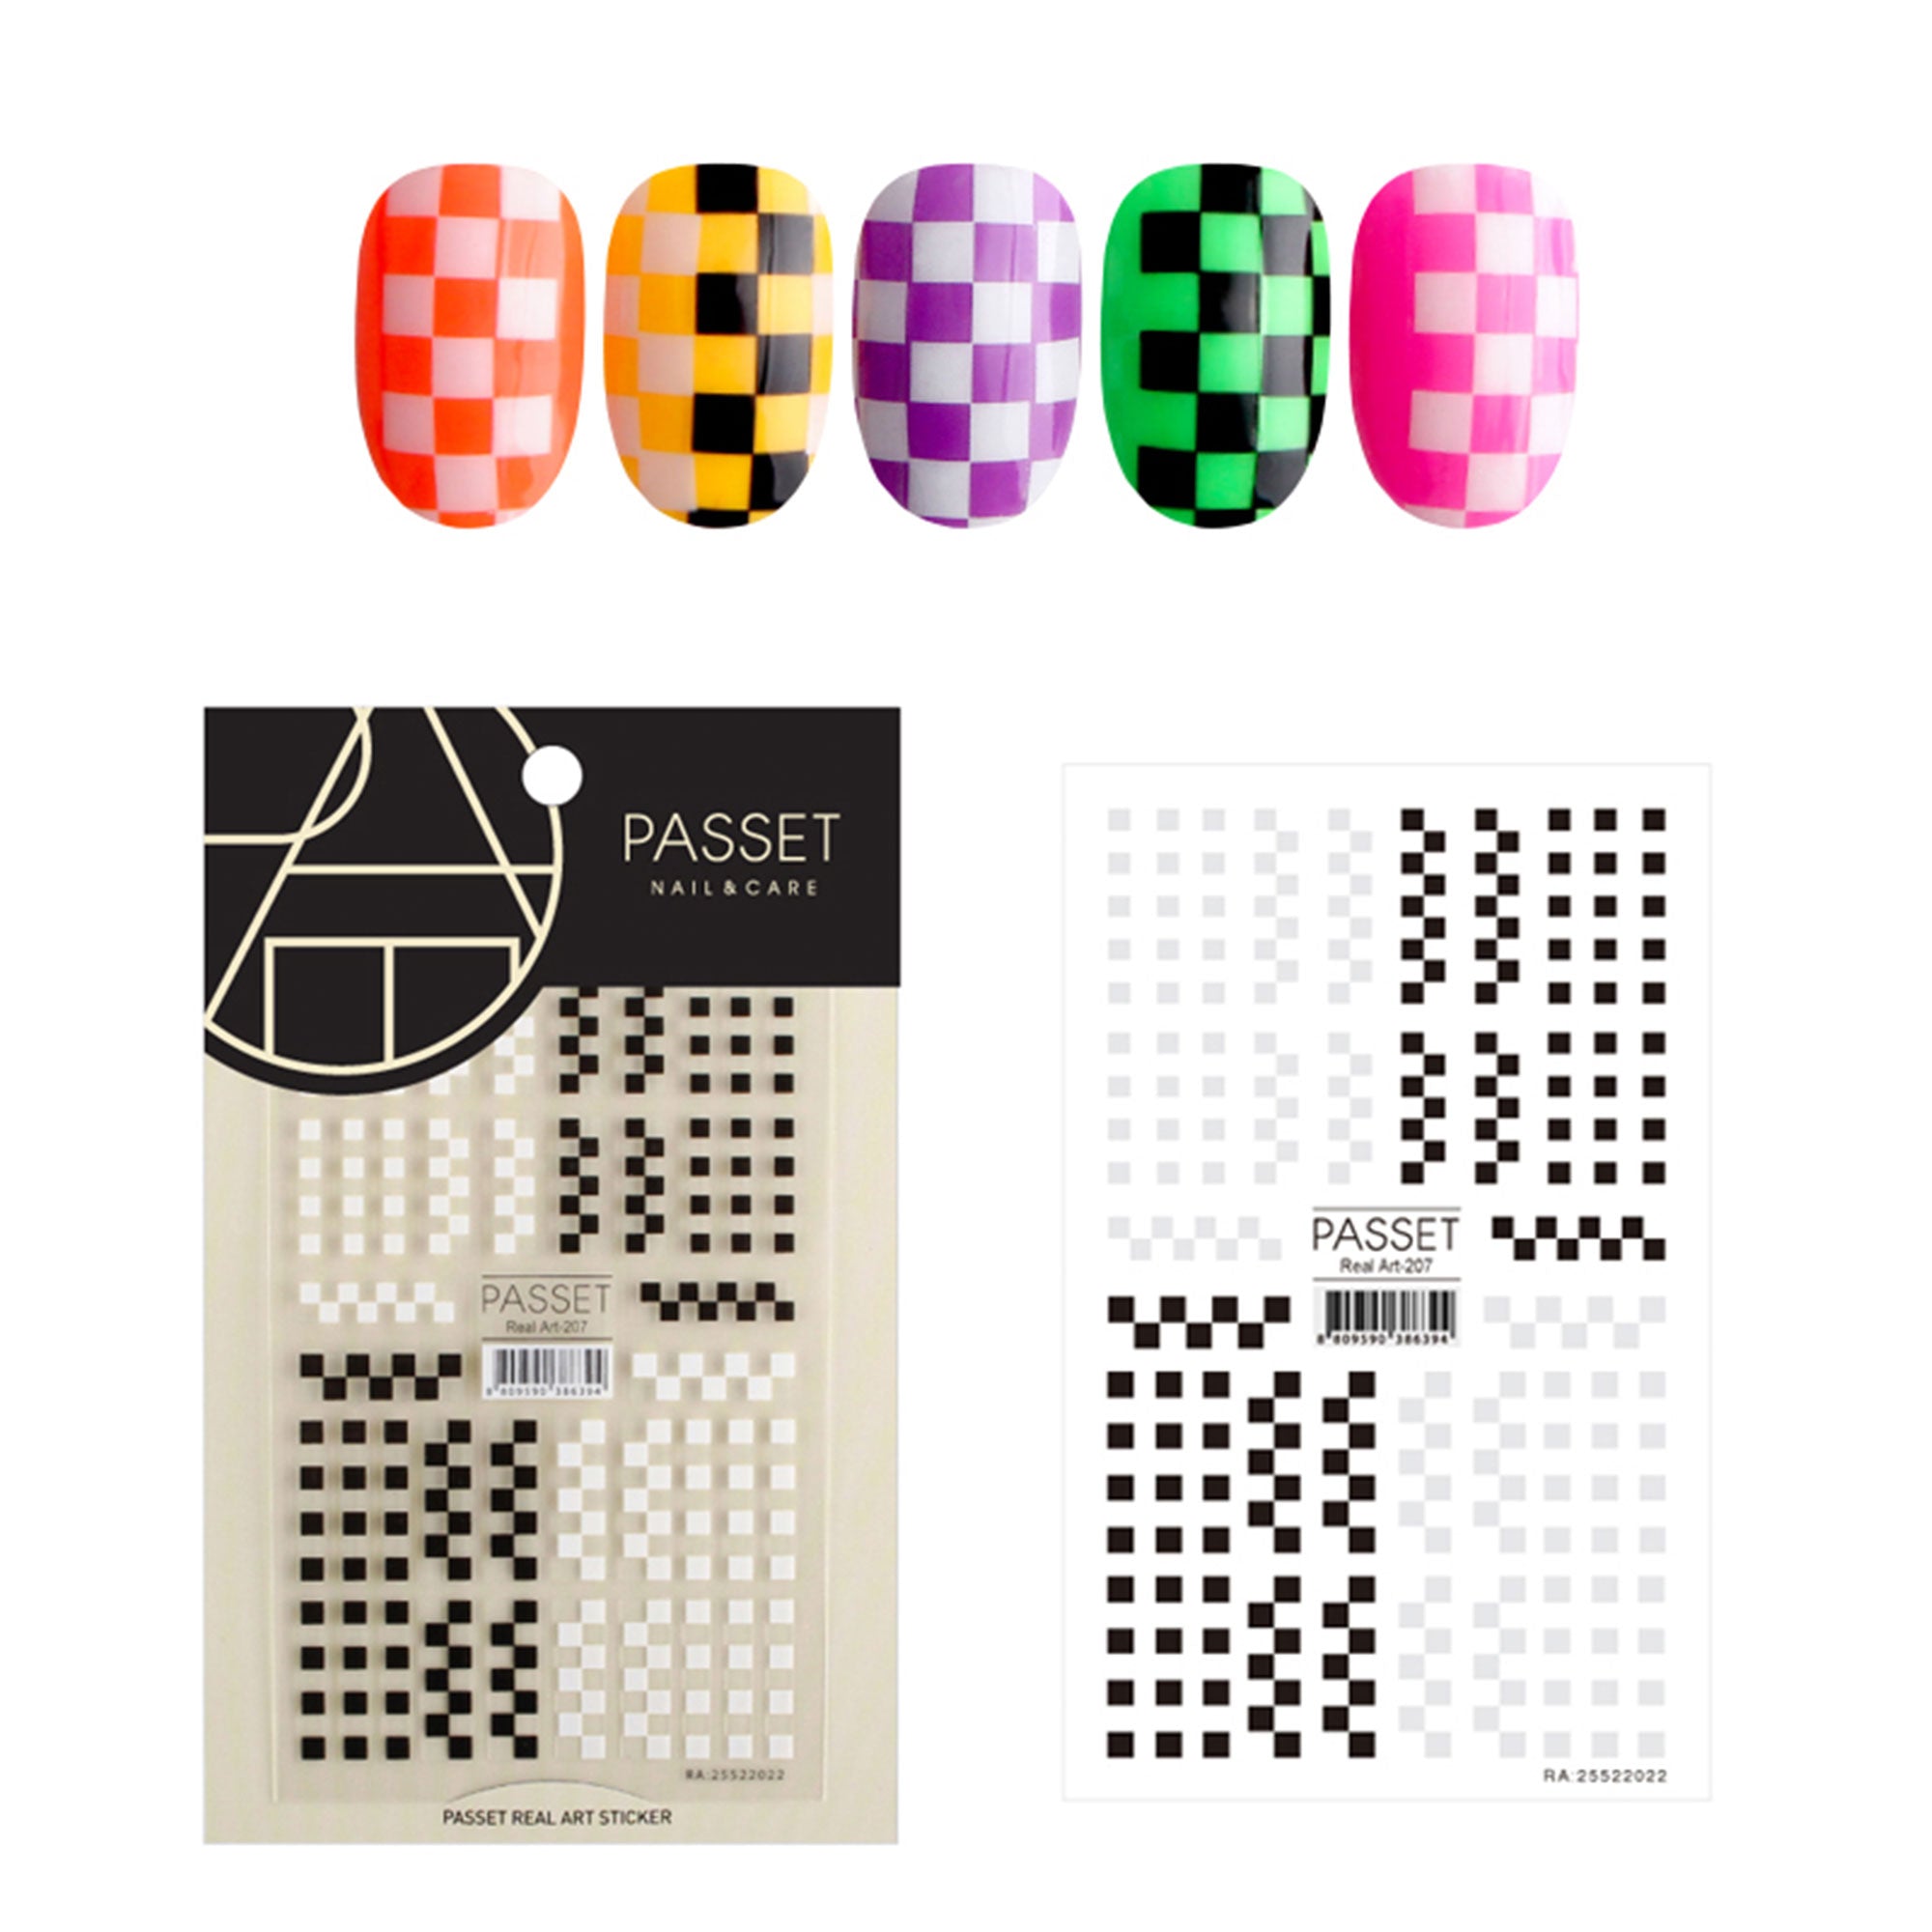 Passet Nail Art Sticker / Checkerboard / Black & White Y2K Abstract Geometric Pattern